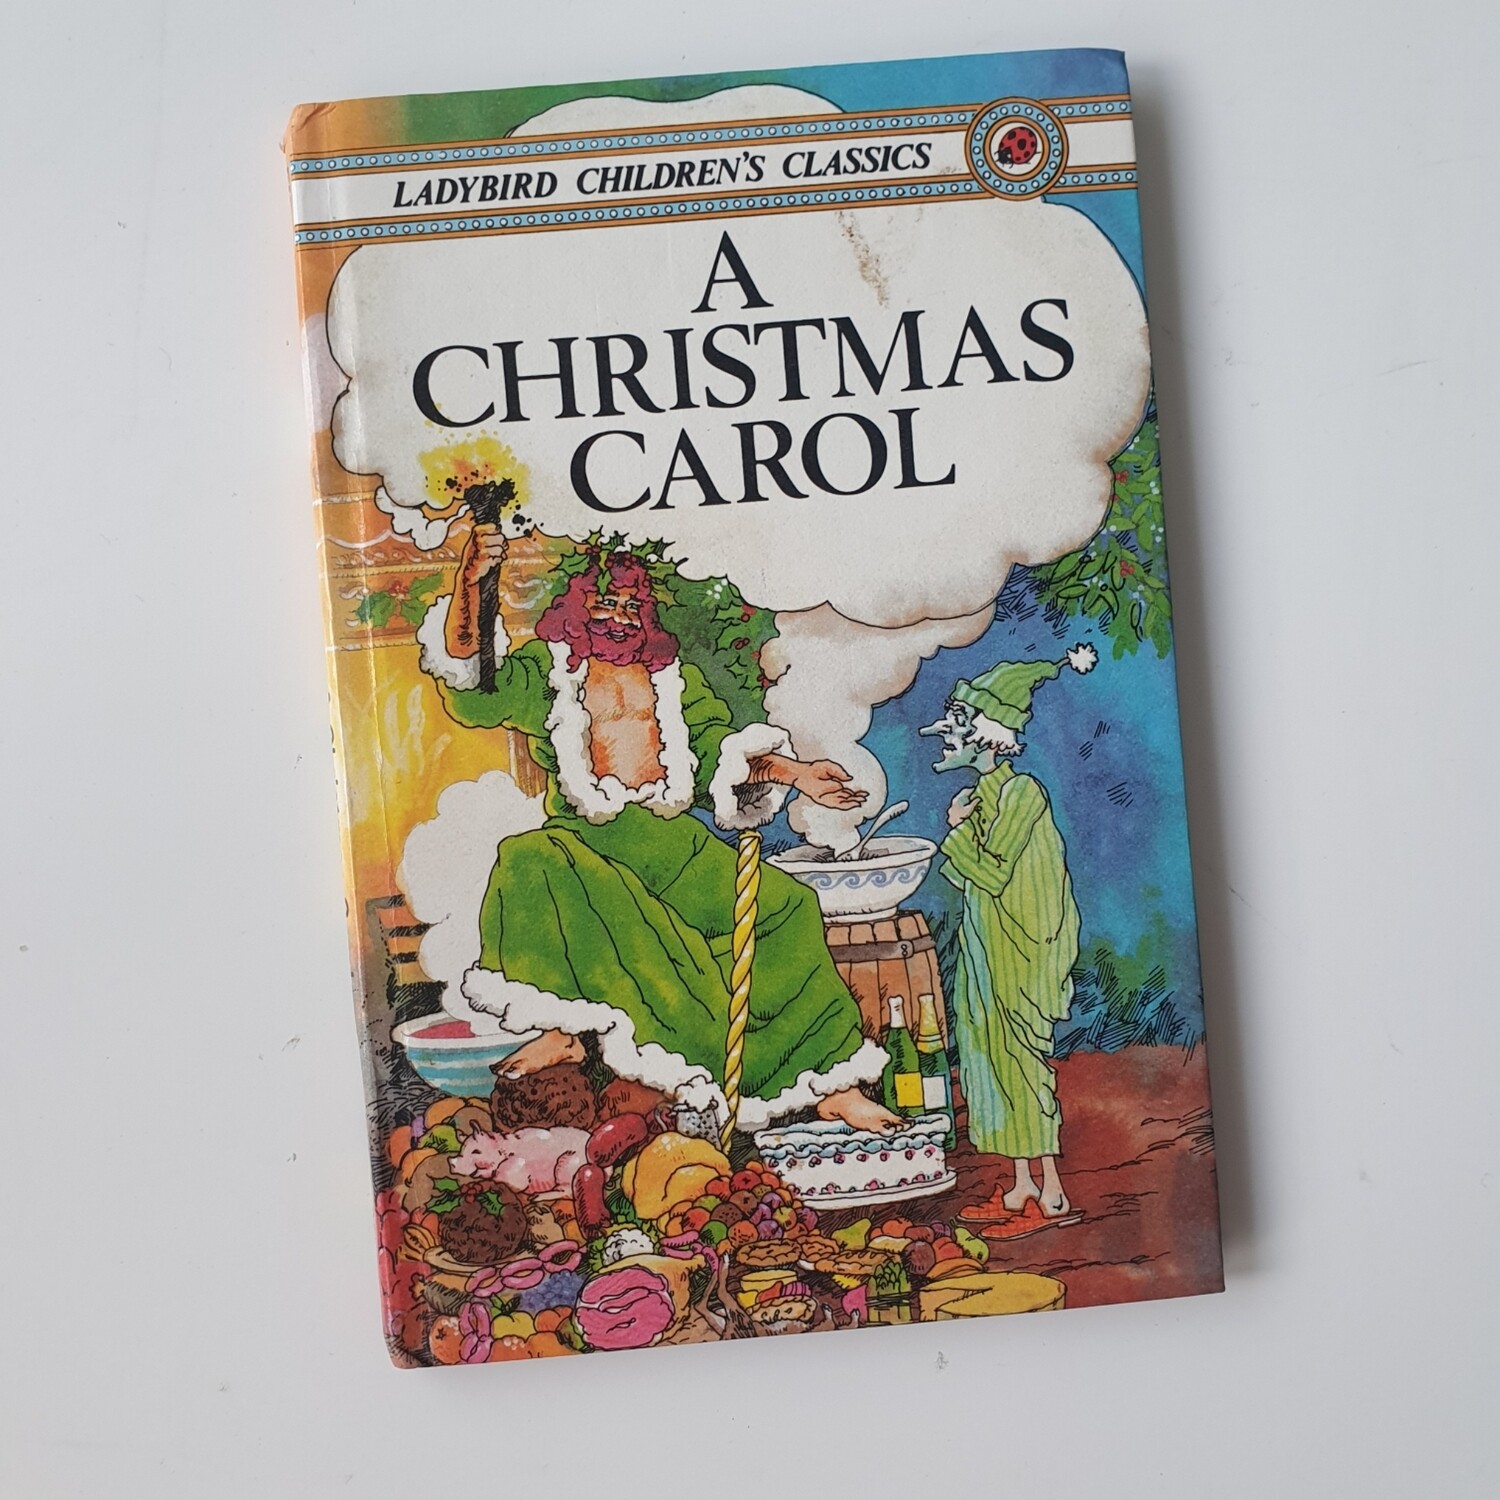 A Christmas Carol made from a ladybird book